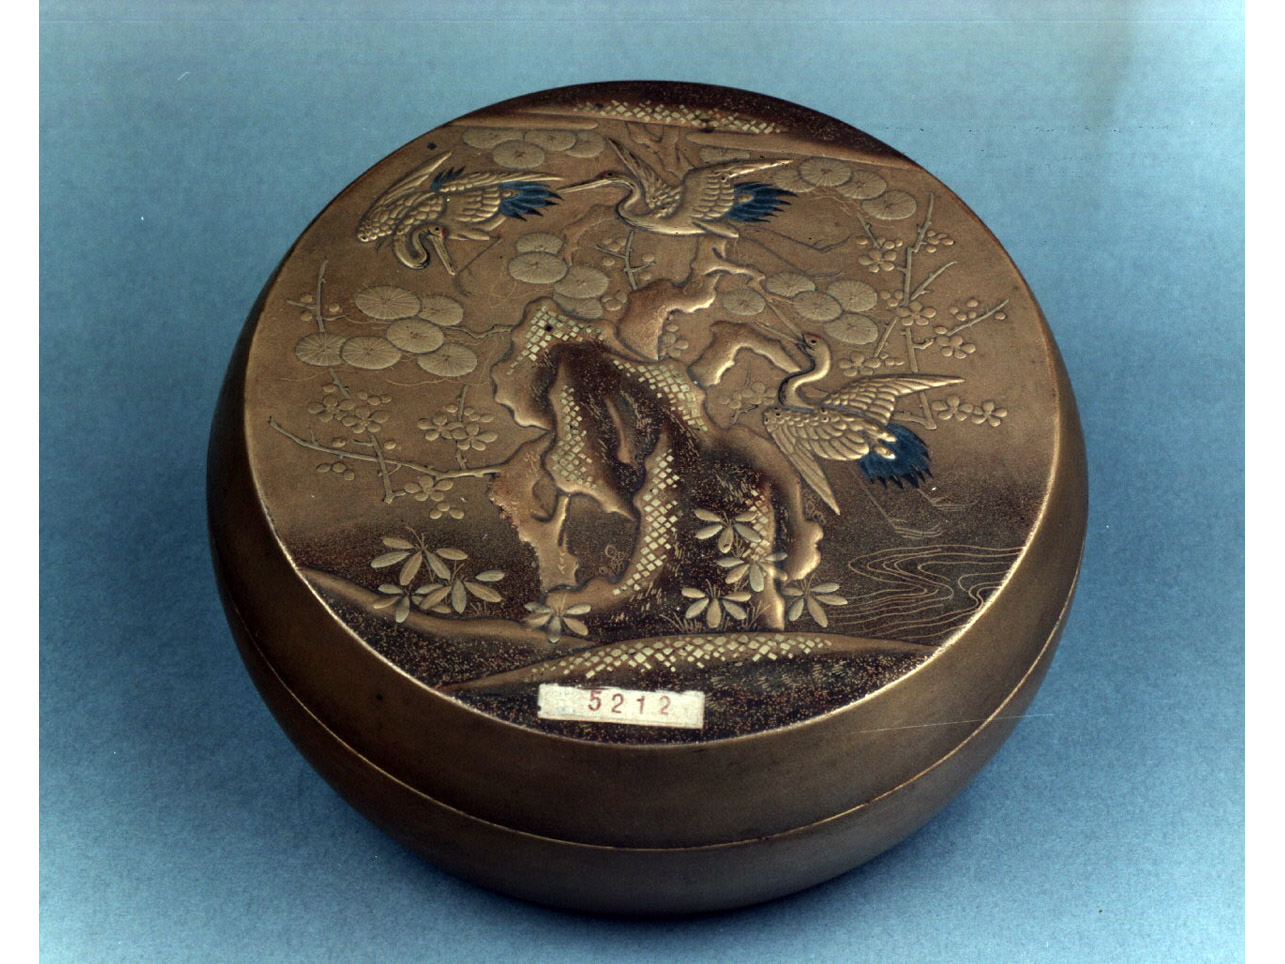 motivi decorativi vegetali e animali (scatola) - manifattura giapponese (secc. XVII/ XVIII)